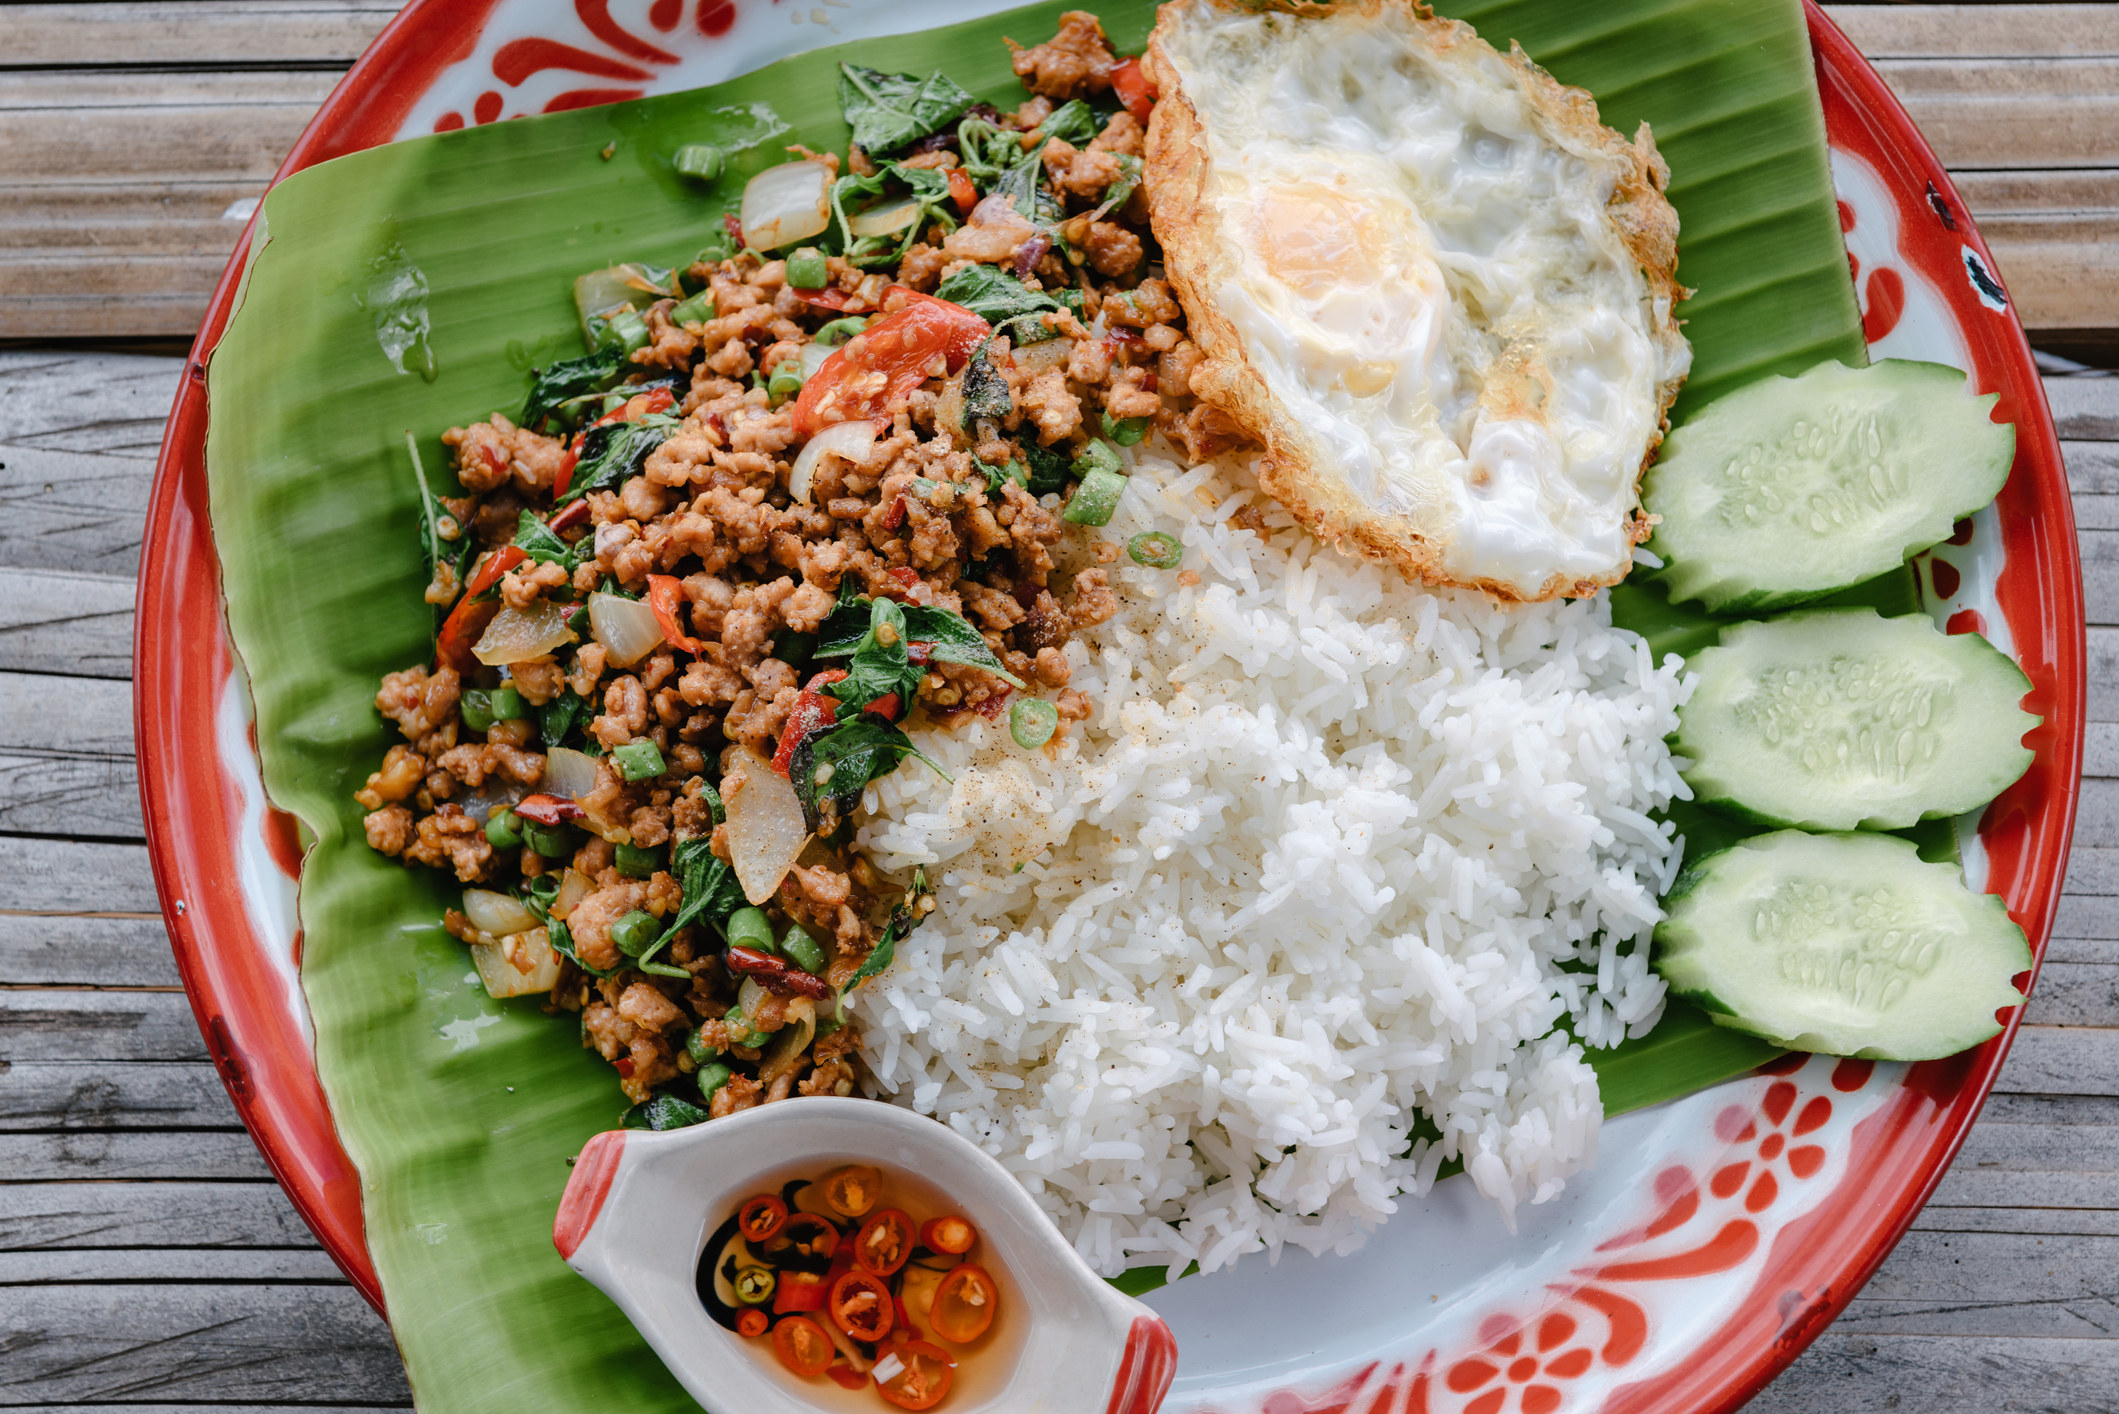 Thai stir-fried pork with rice and egg.